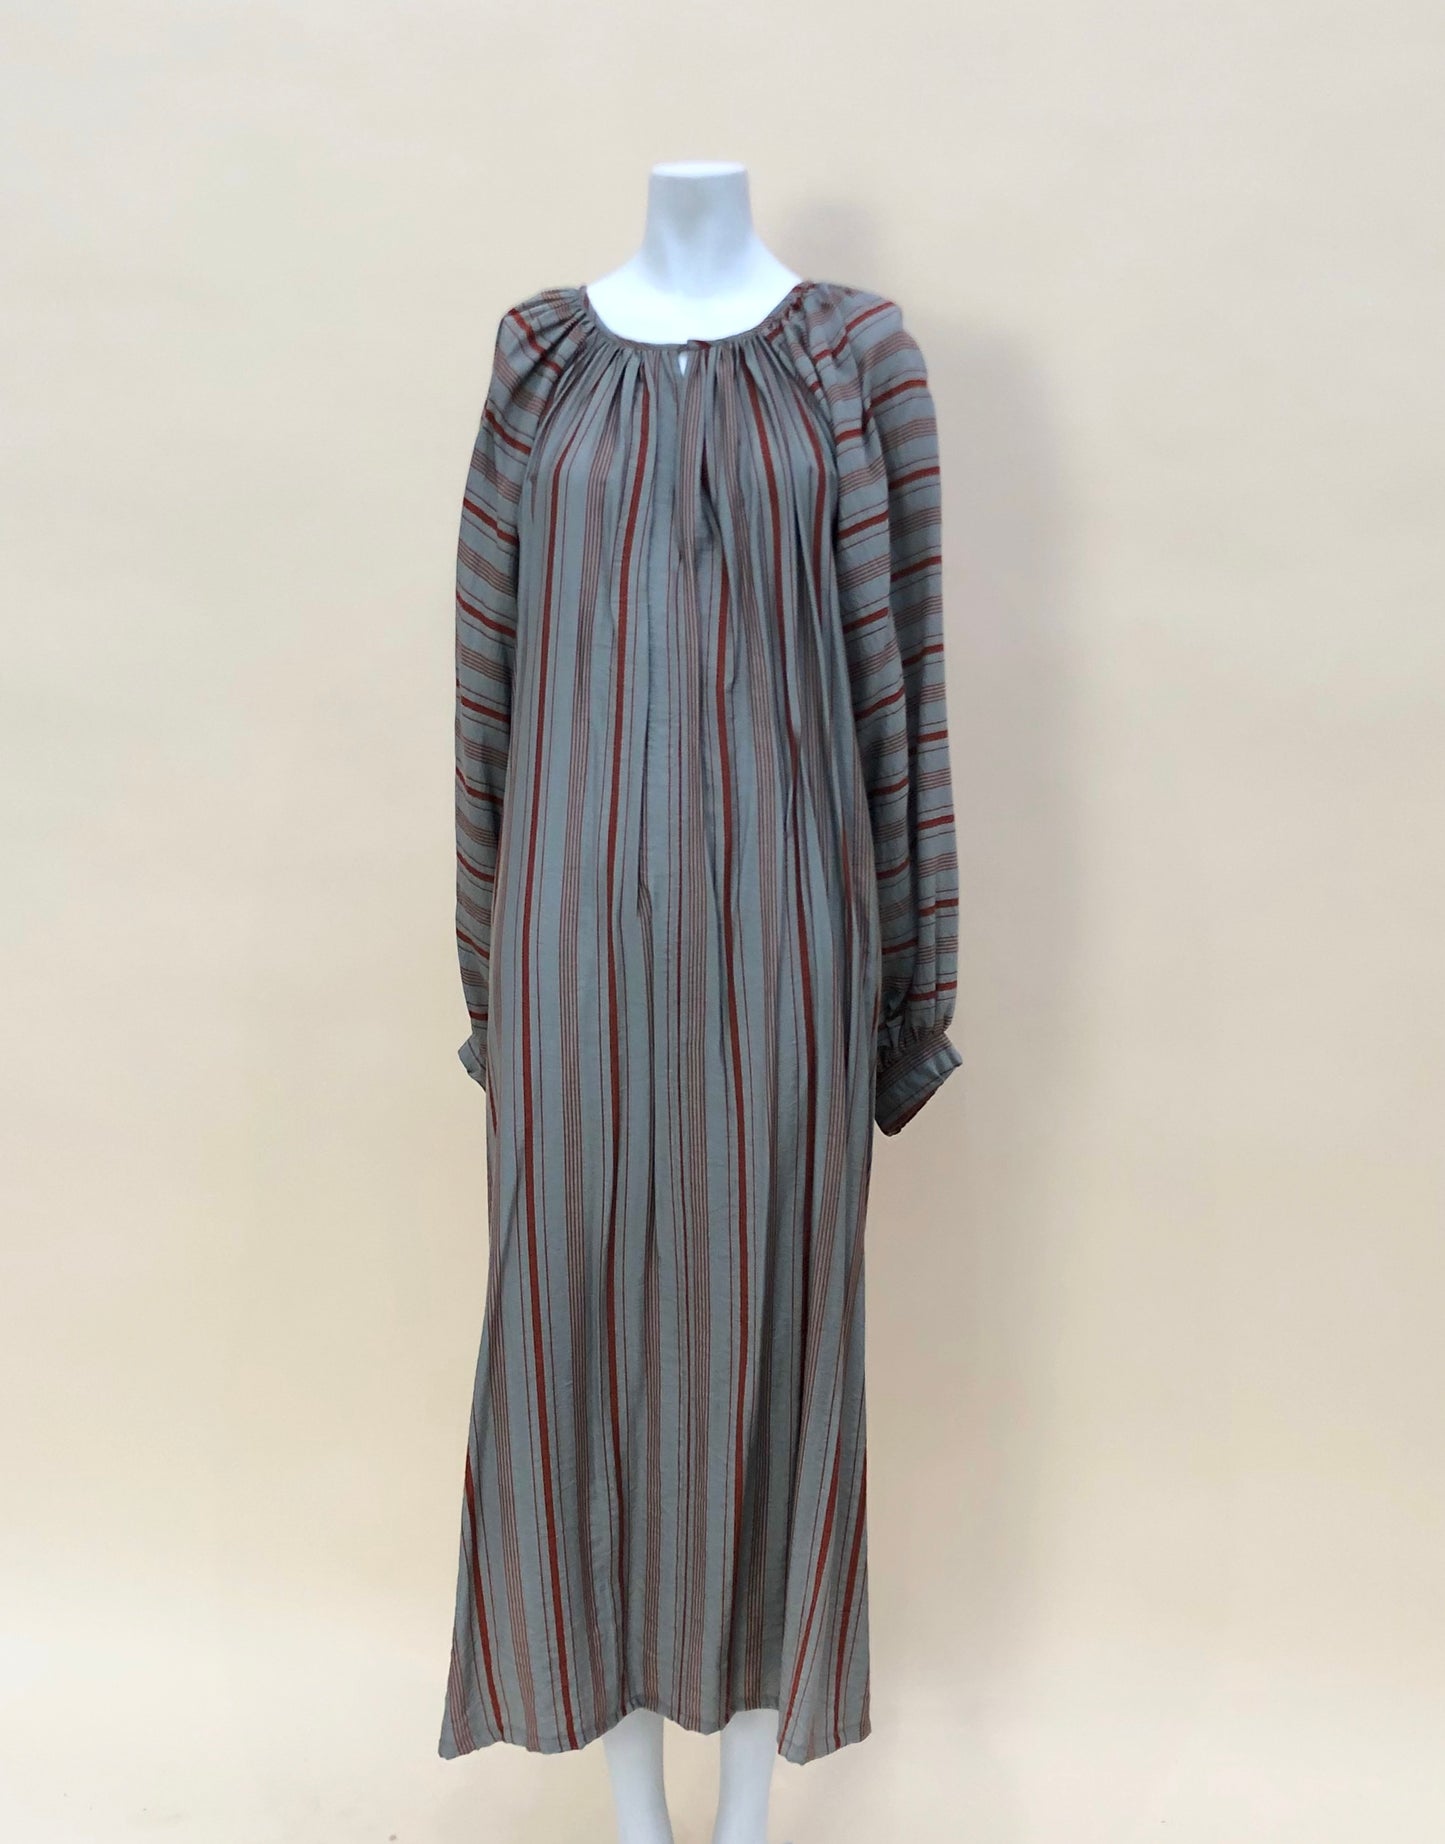 Olive & Brown Striped Dress